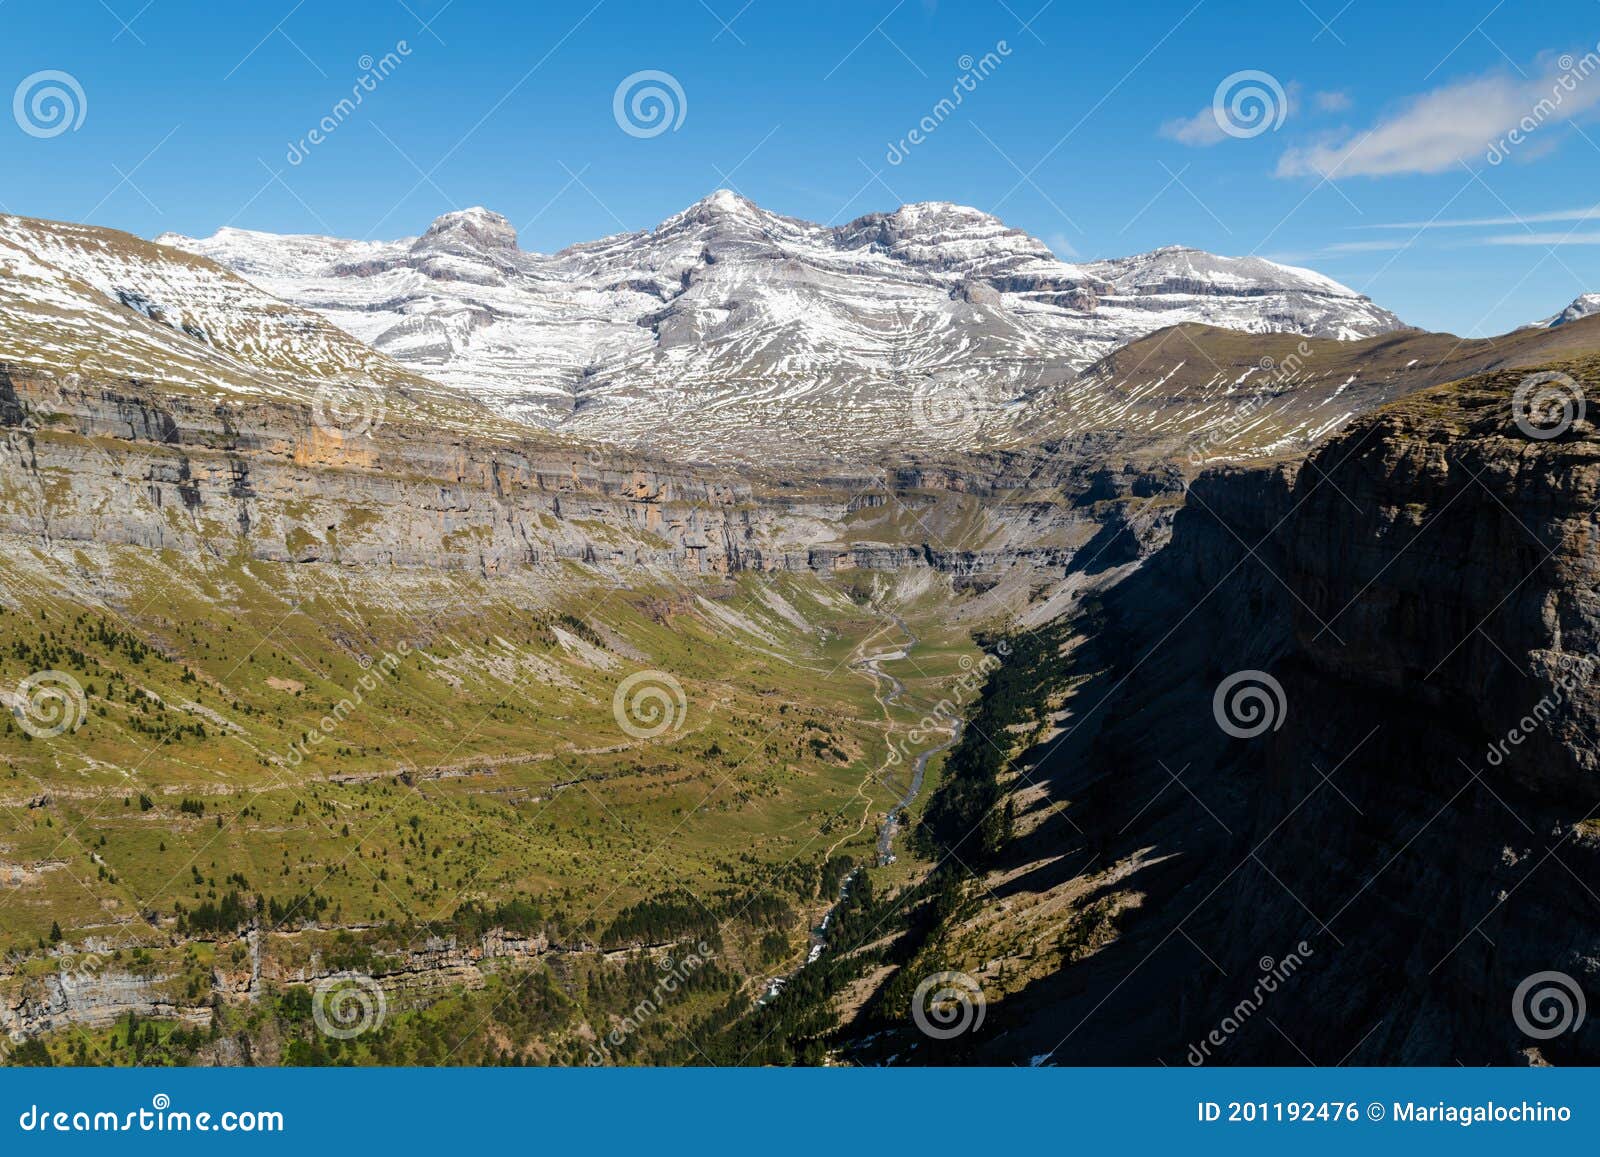 views of ordesa national park with the peaks of monte perdido, aÃÂ±isclo, punta olas, cilindro del marbore snow-capped